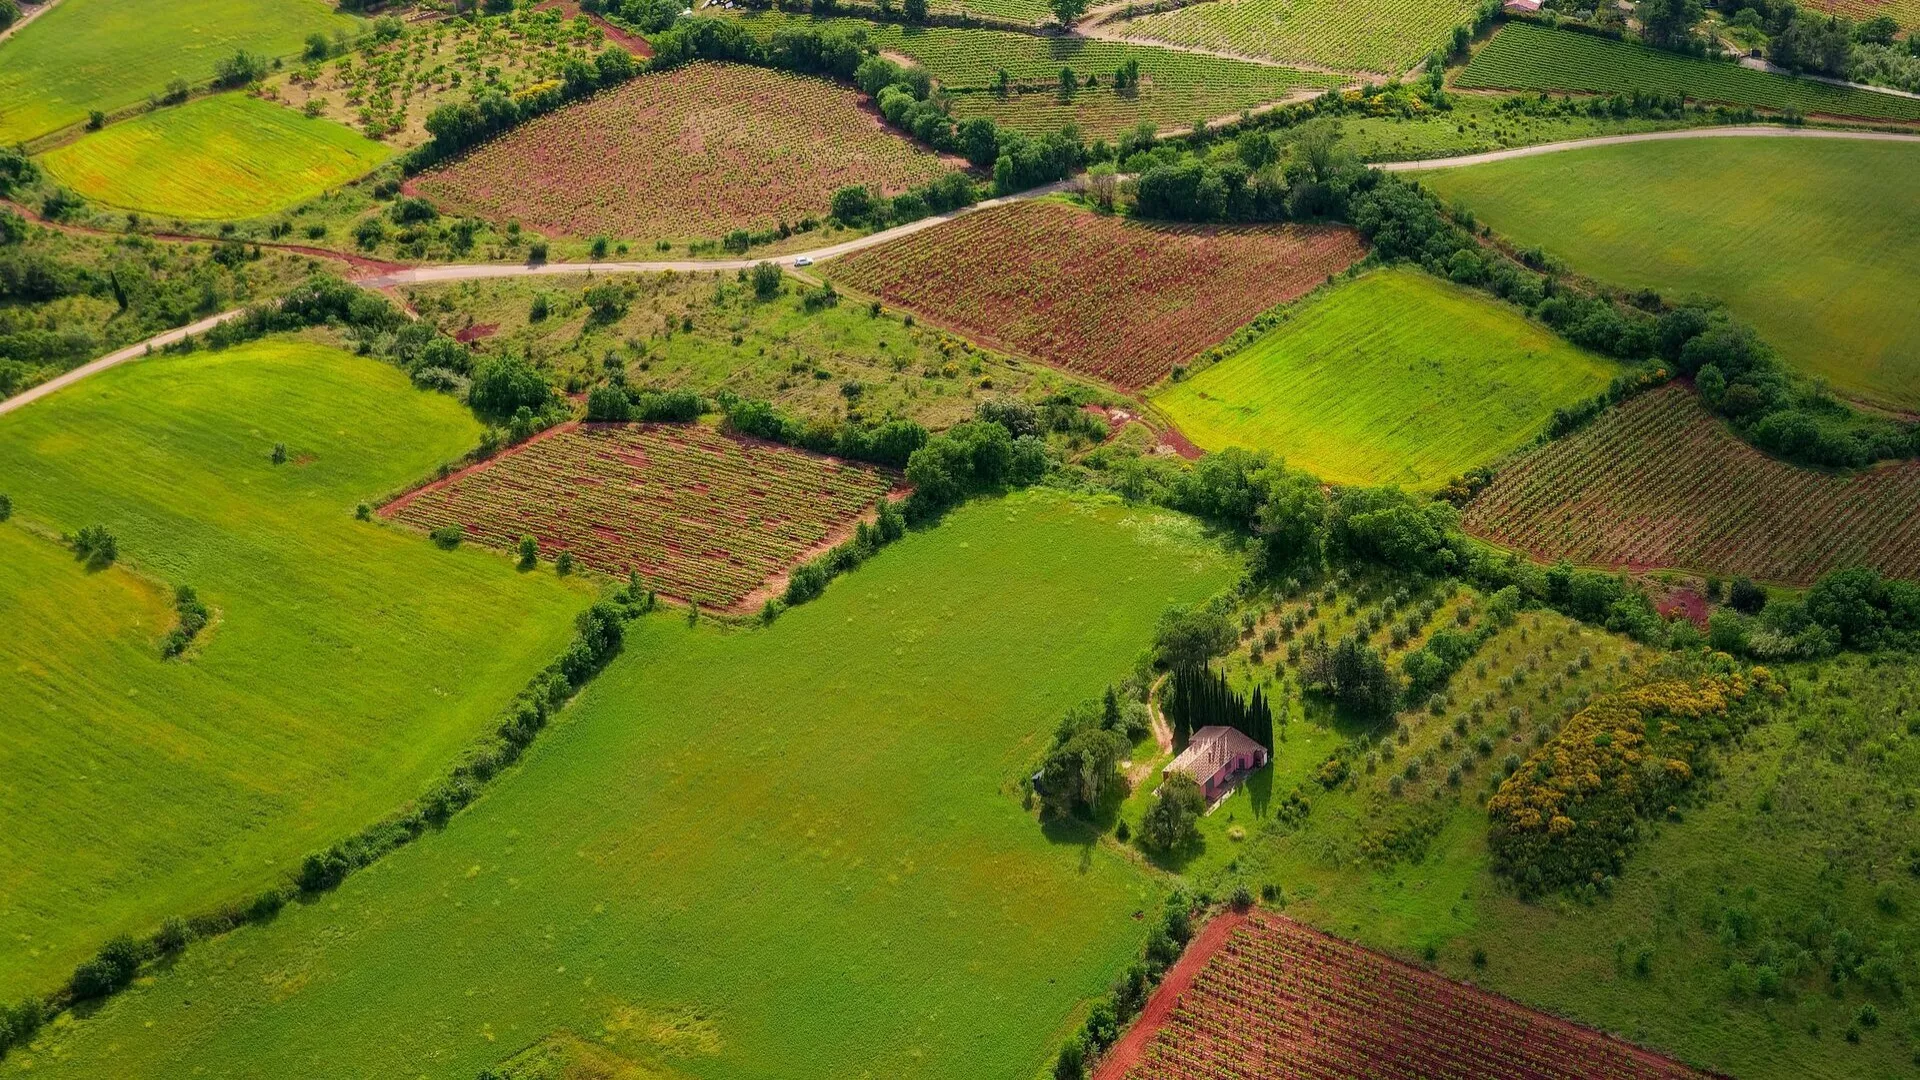 Agricultural loan “Ozoli”, Ērgļu parish, Madonas region